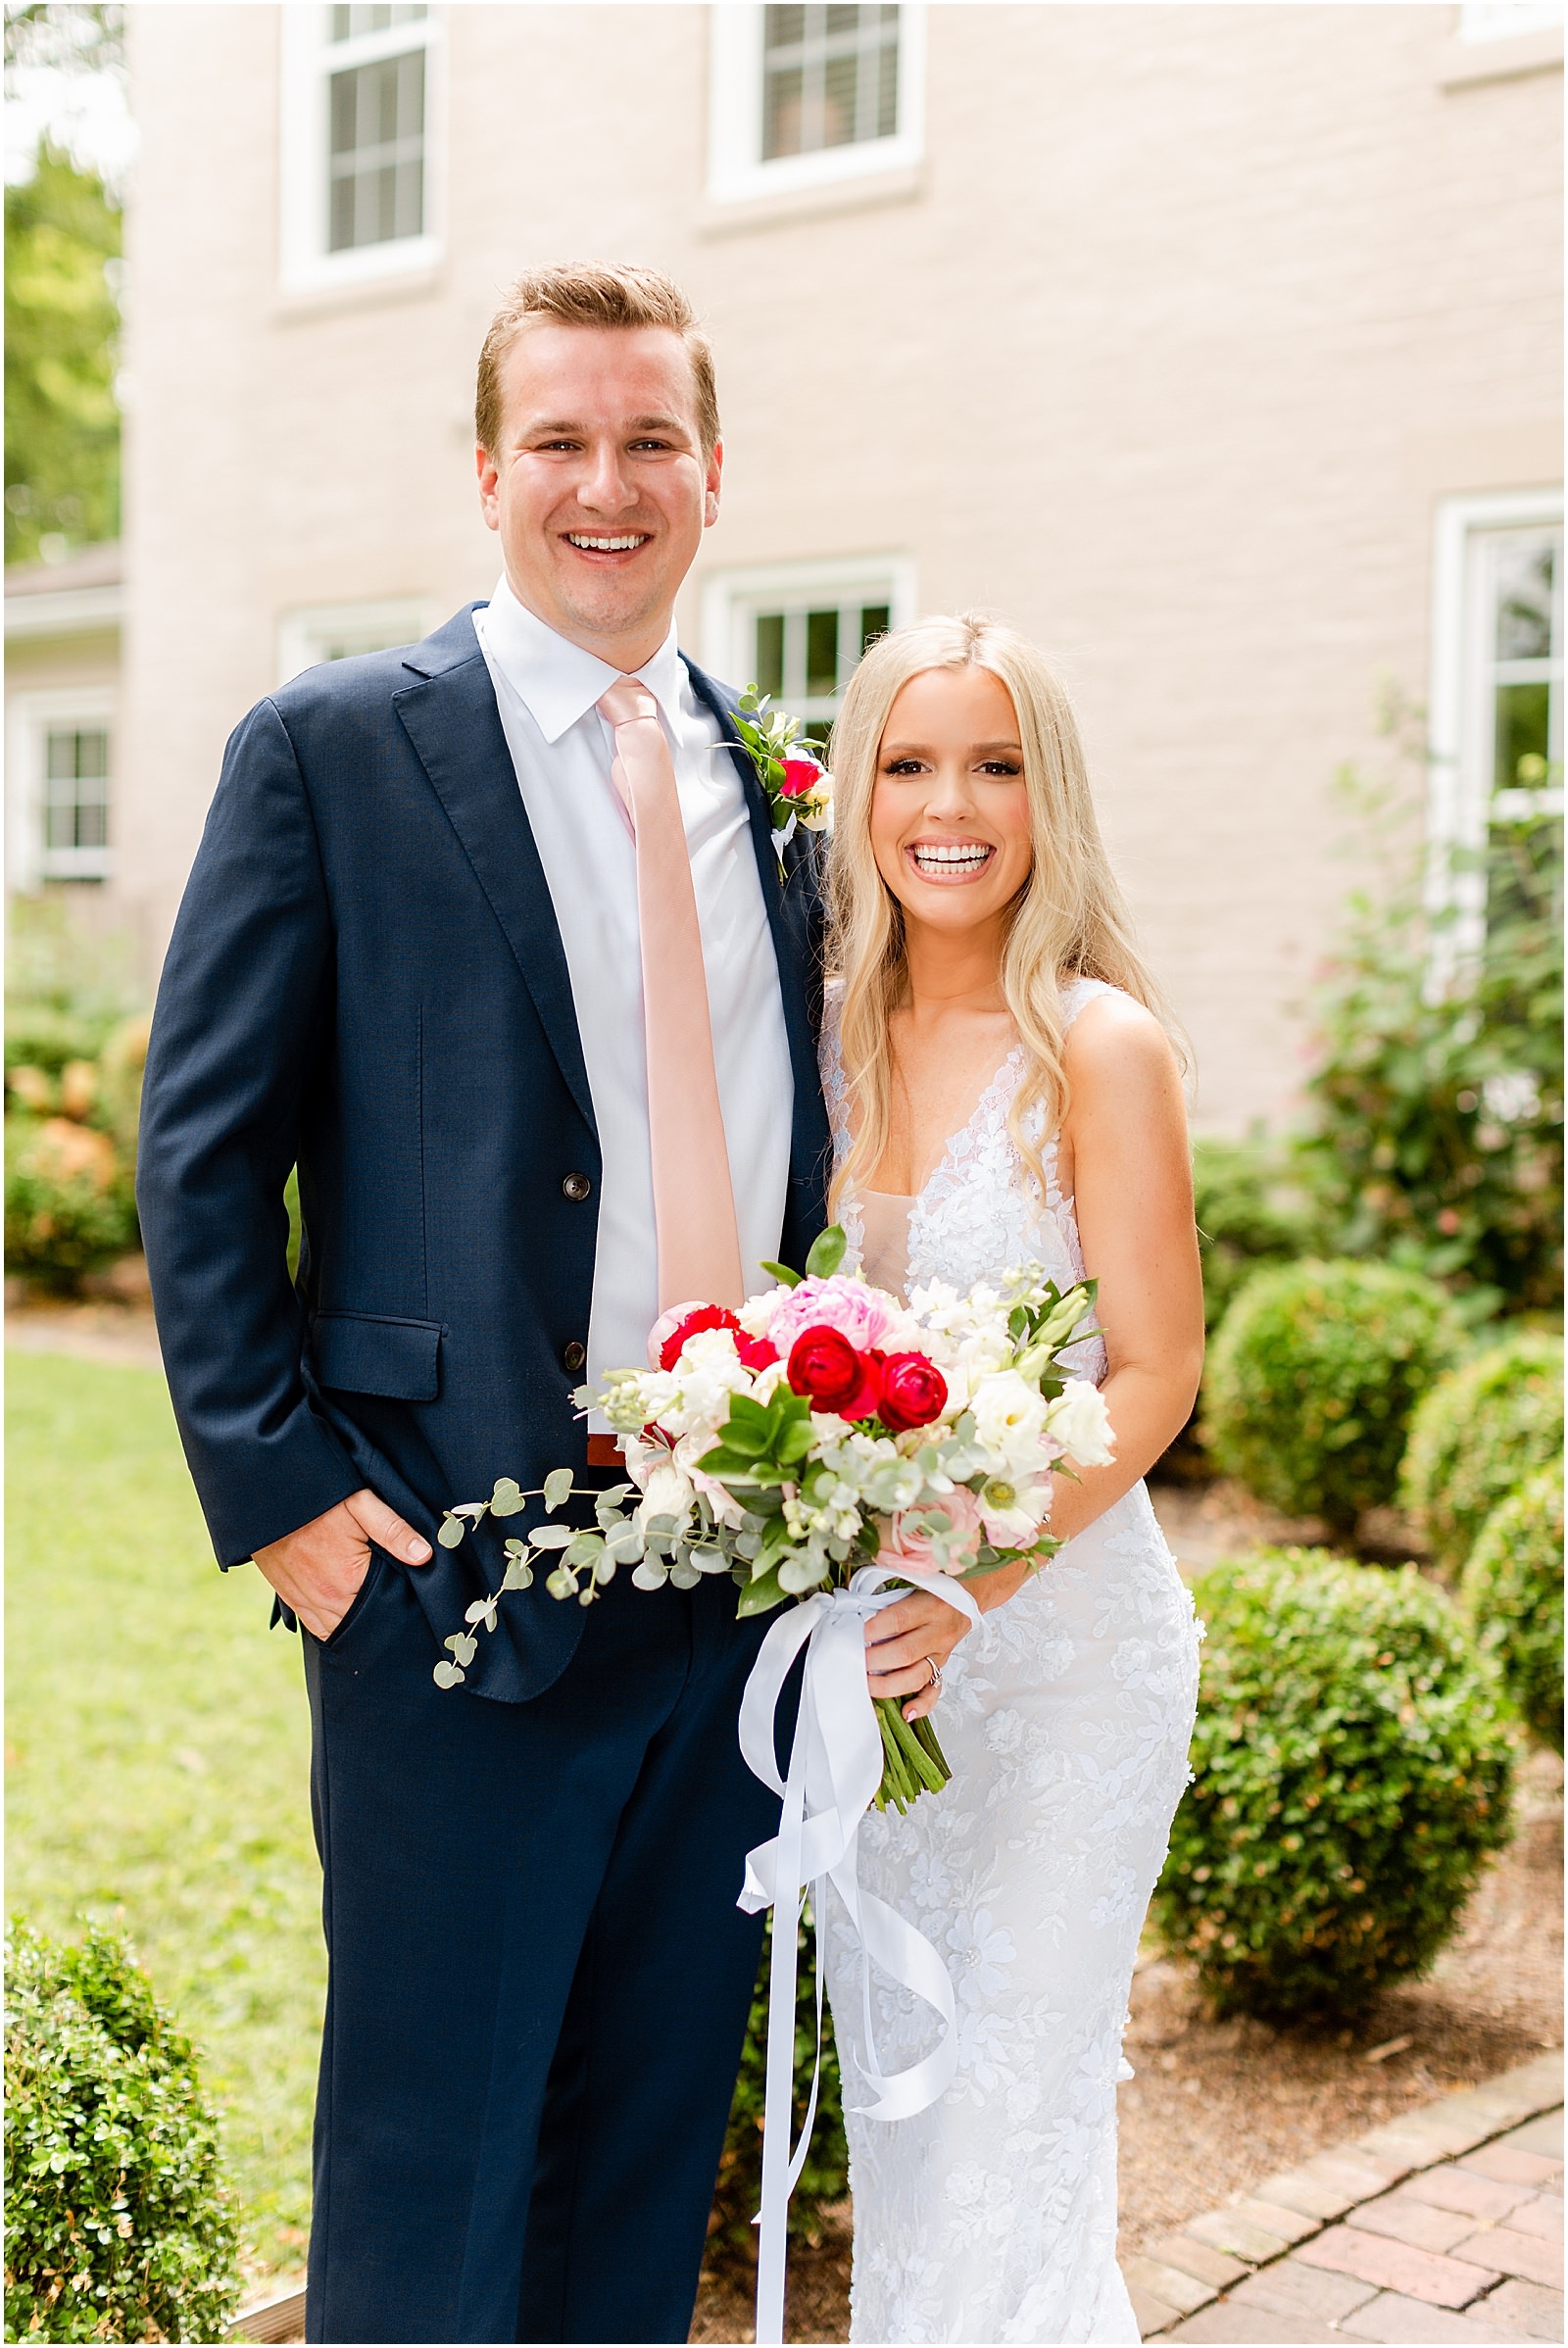 An Evansville Country Club Wedding | Madison and Christiaan | Bret and Brandie | Evansville Photographers | @bretandbrandie-0095.jpg